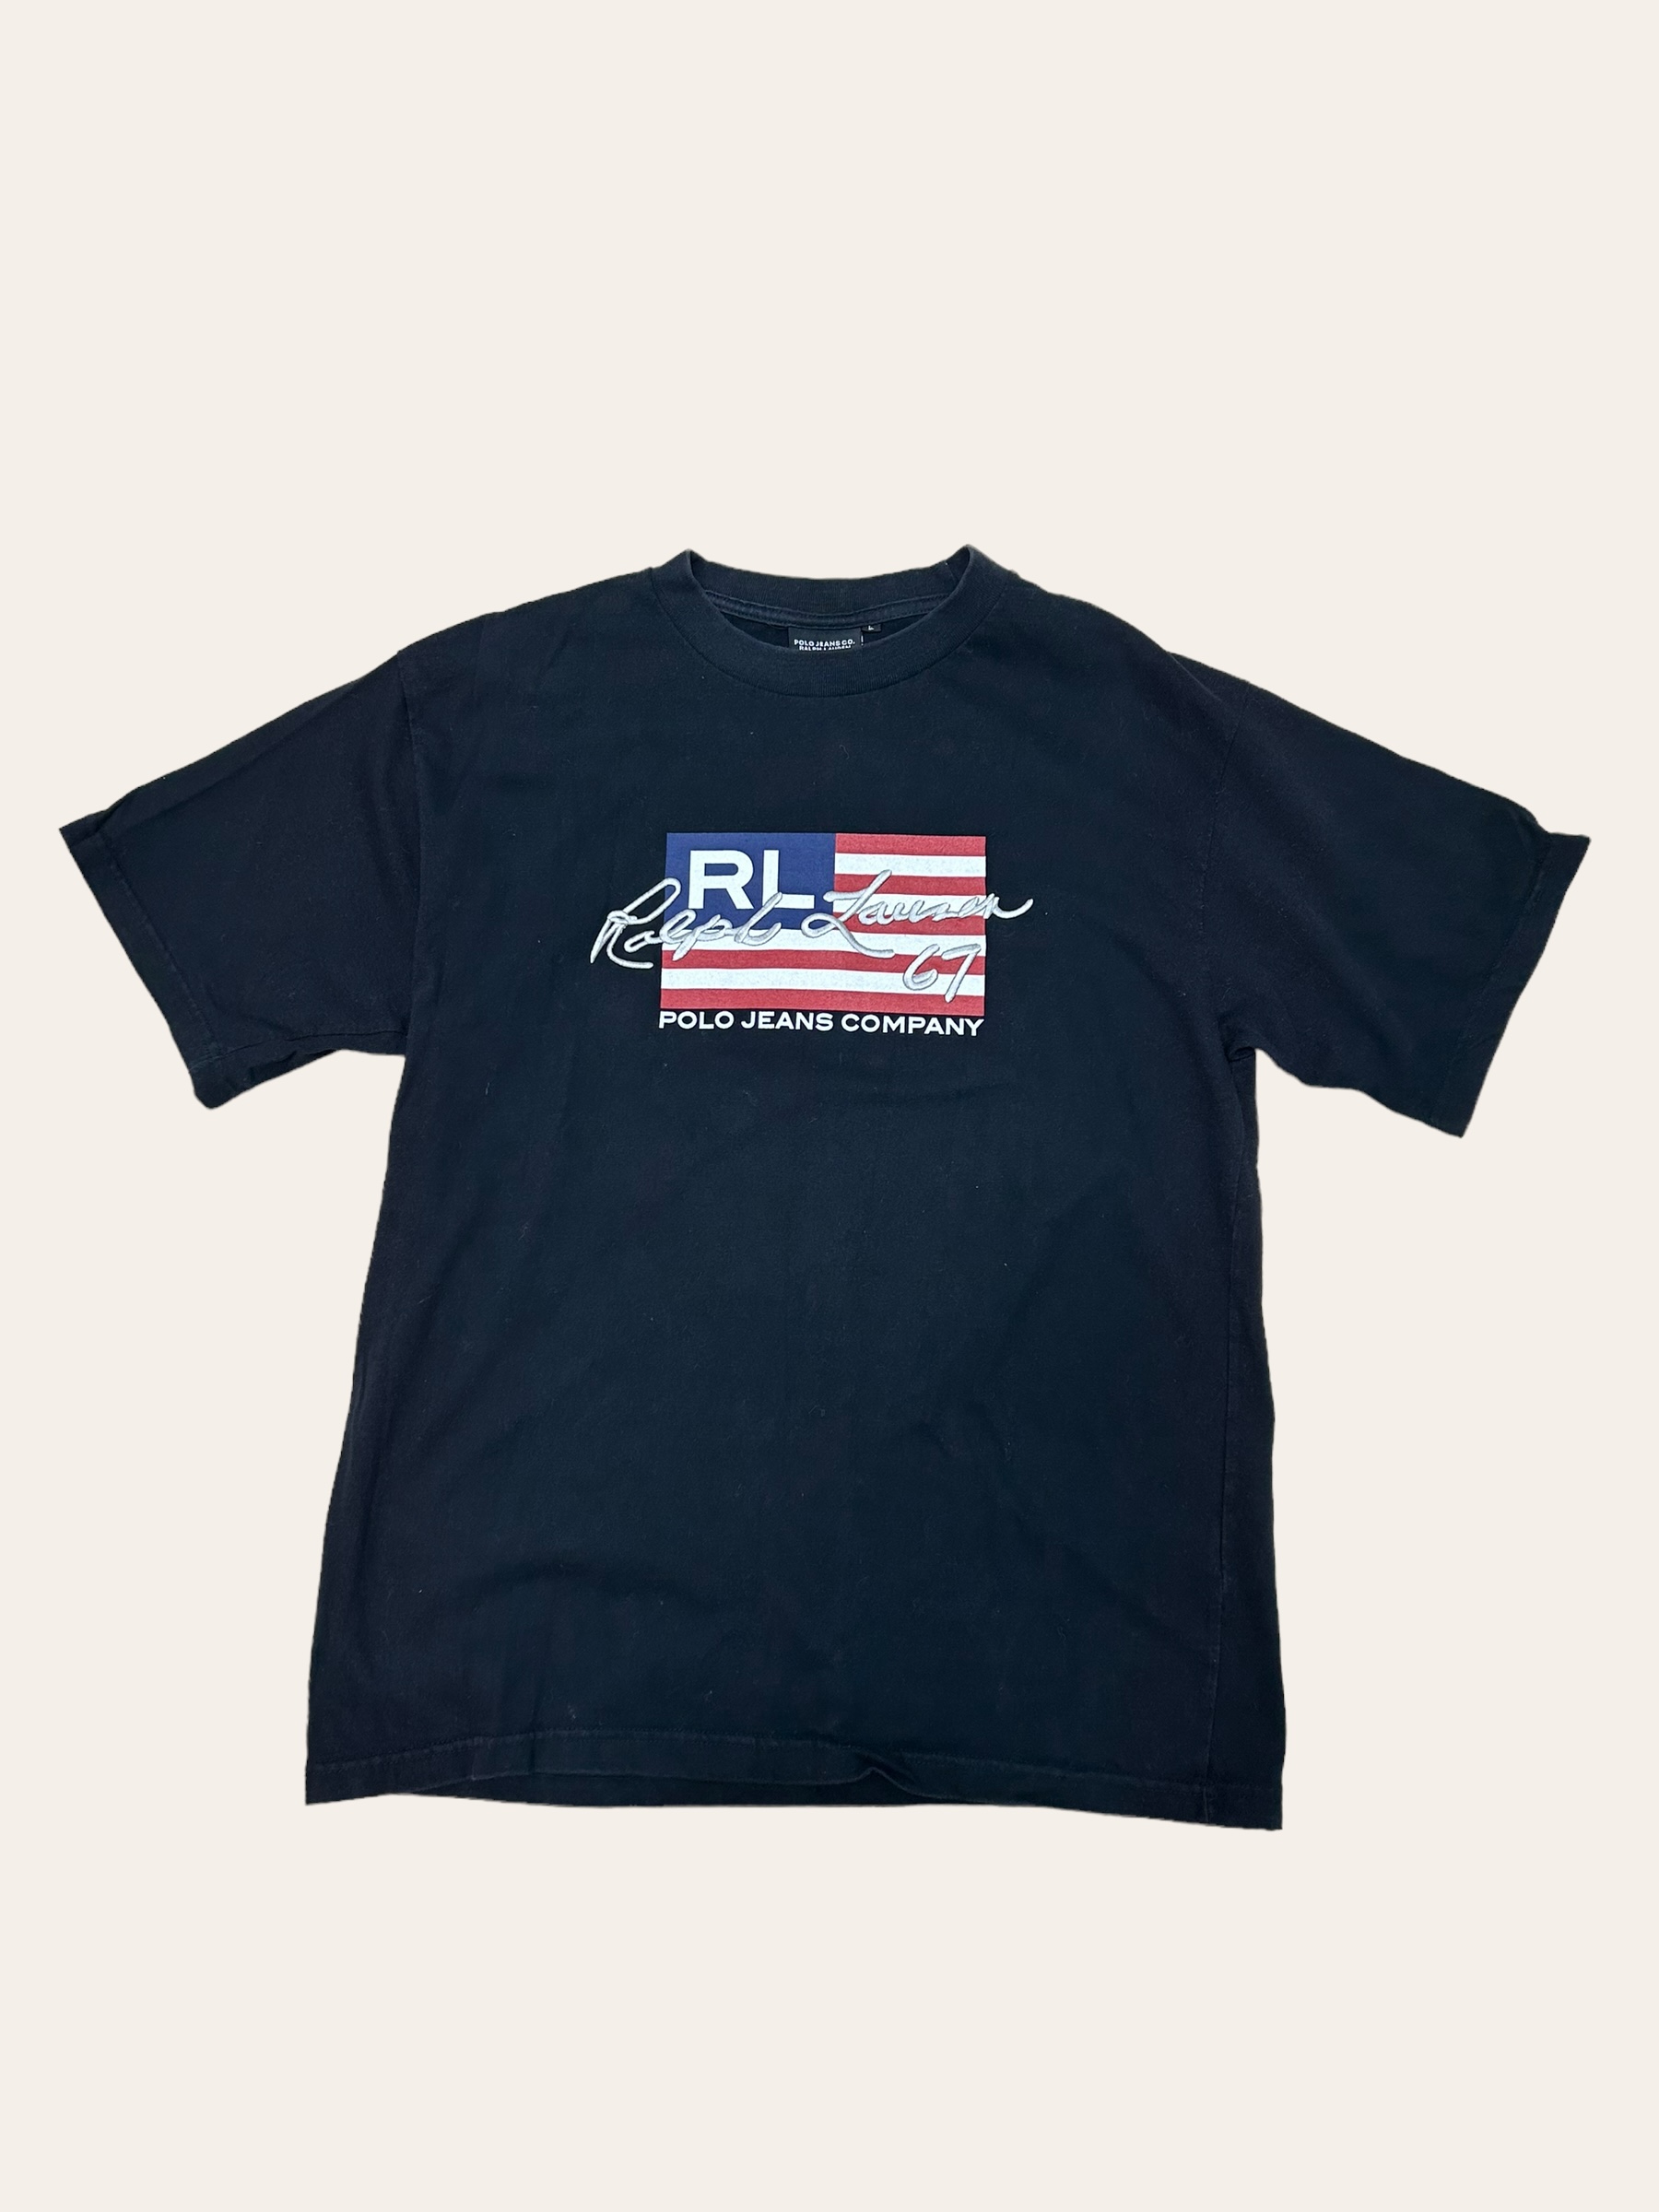 Polo jeans company black USA flag printing T-shirt L